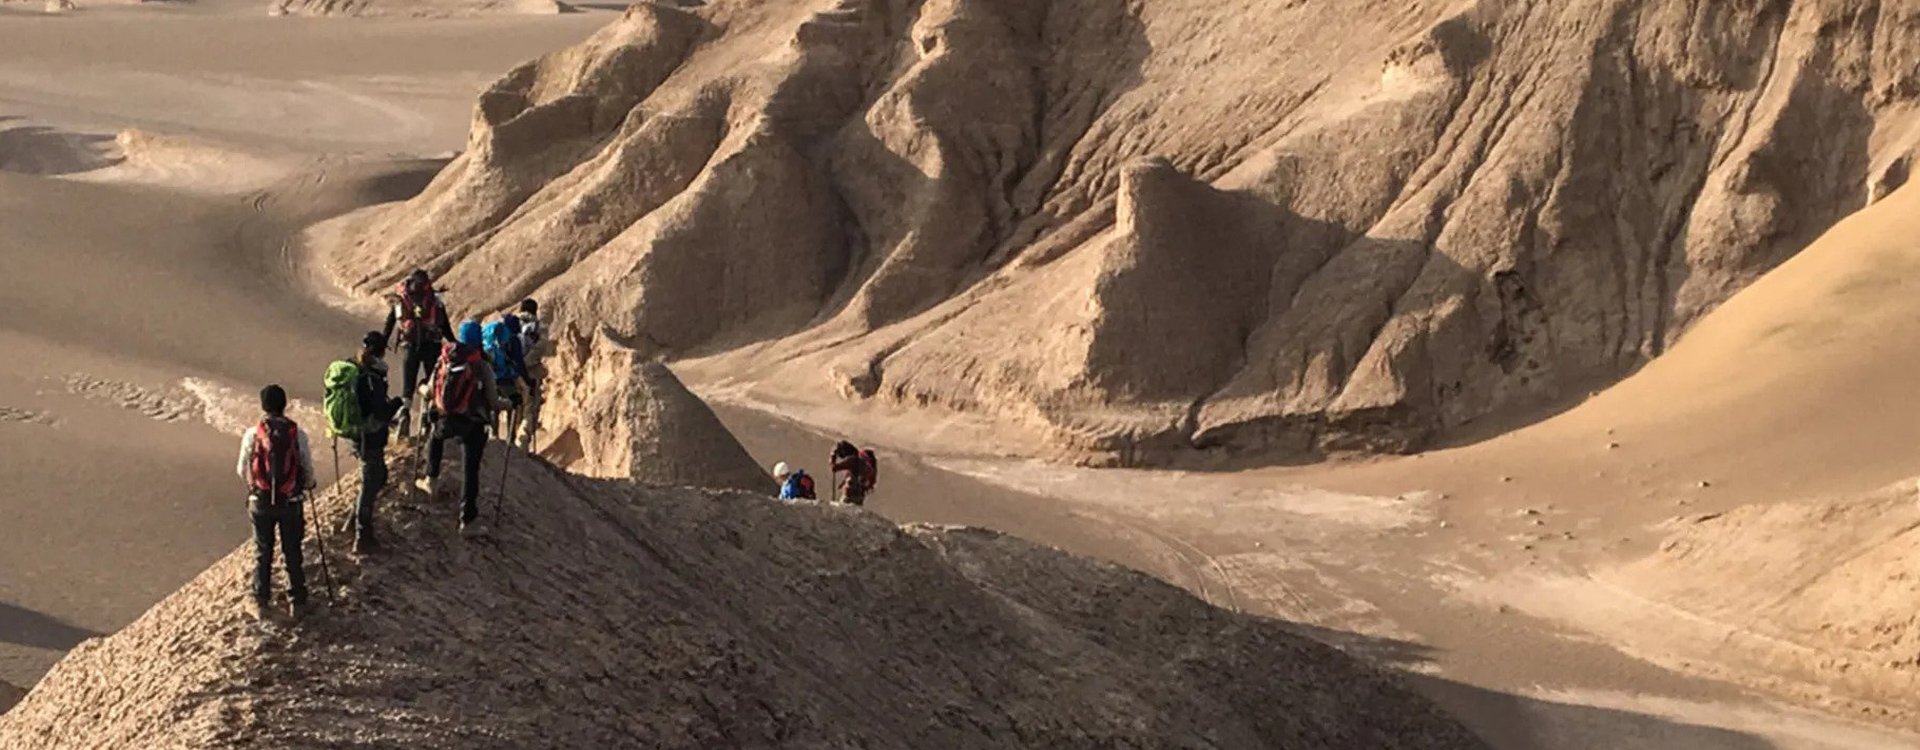 Trekking Across The Iranian Desert